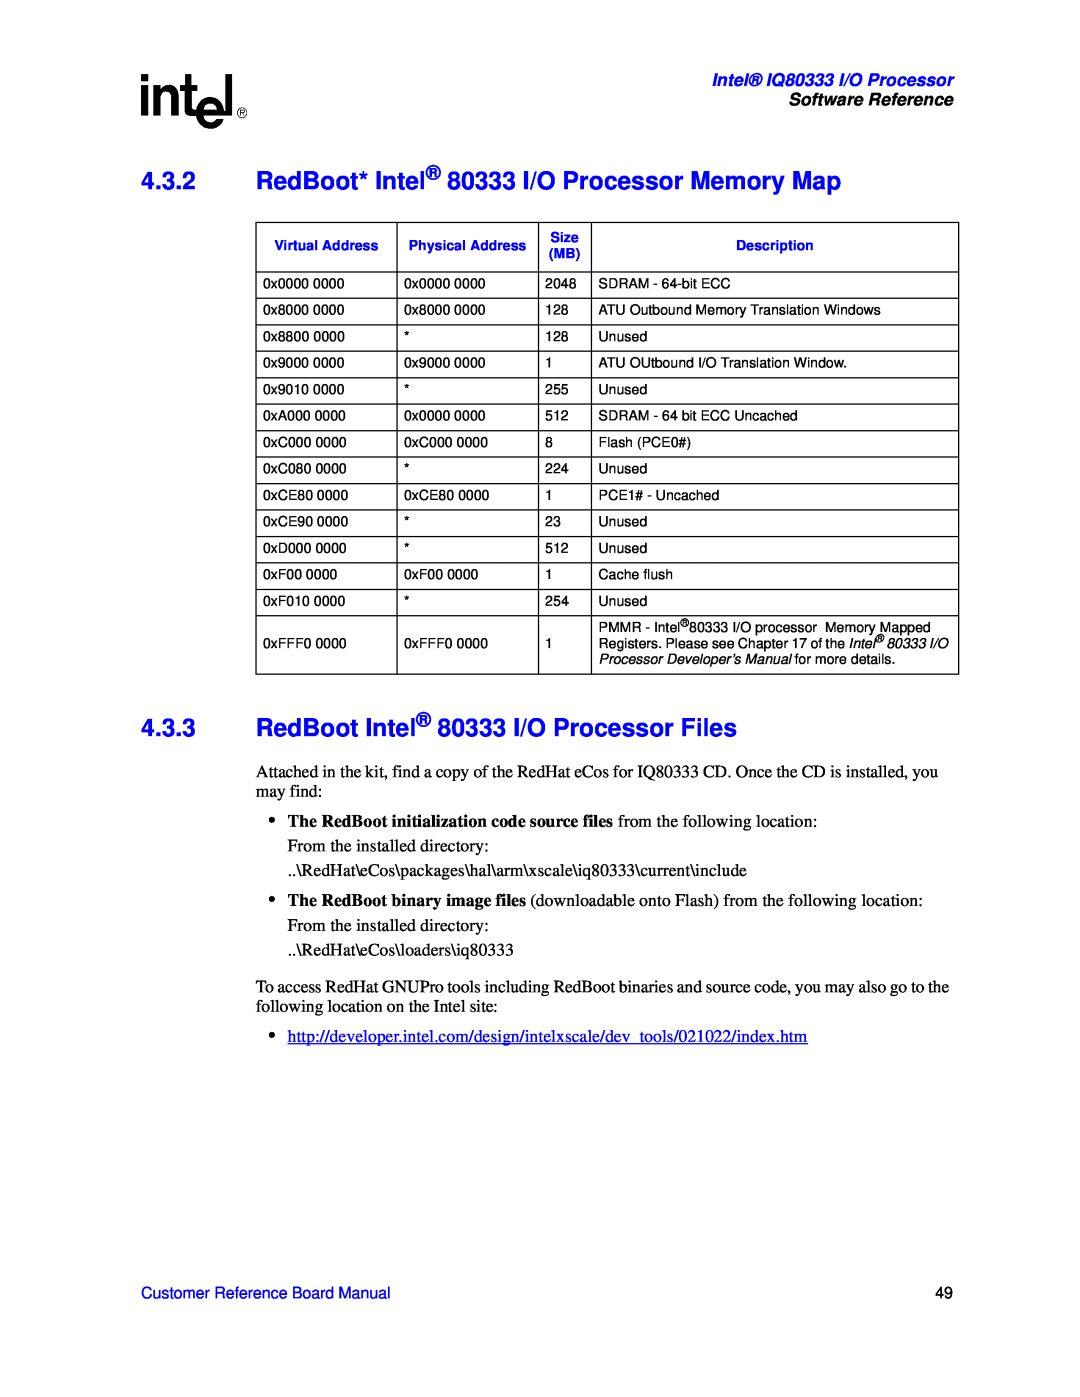 Intel manual 4.3.3RedBoot Intel 80333 I/O Processor Files, Intel IQ80333 I/O Processor, Software Reference 